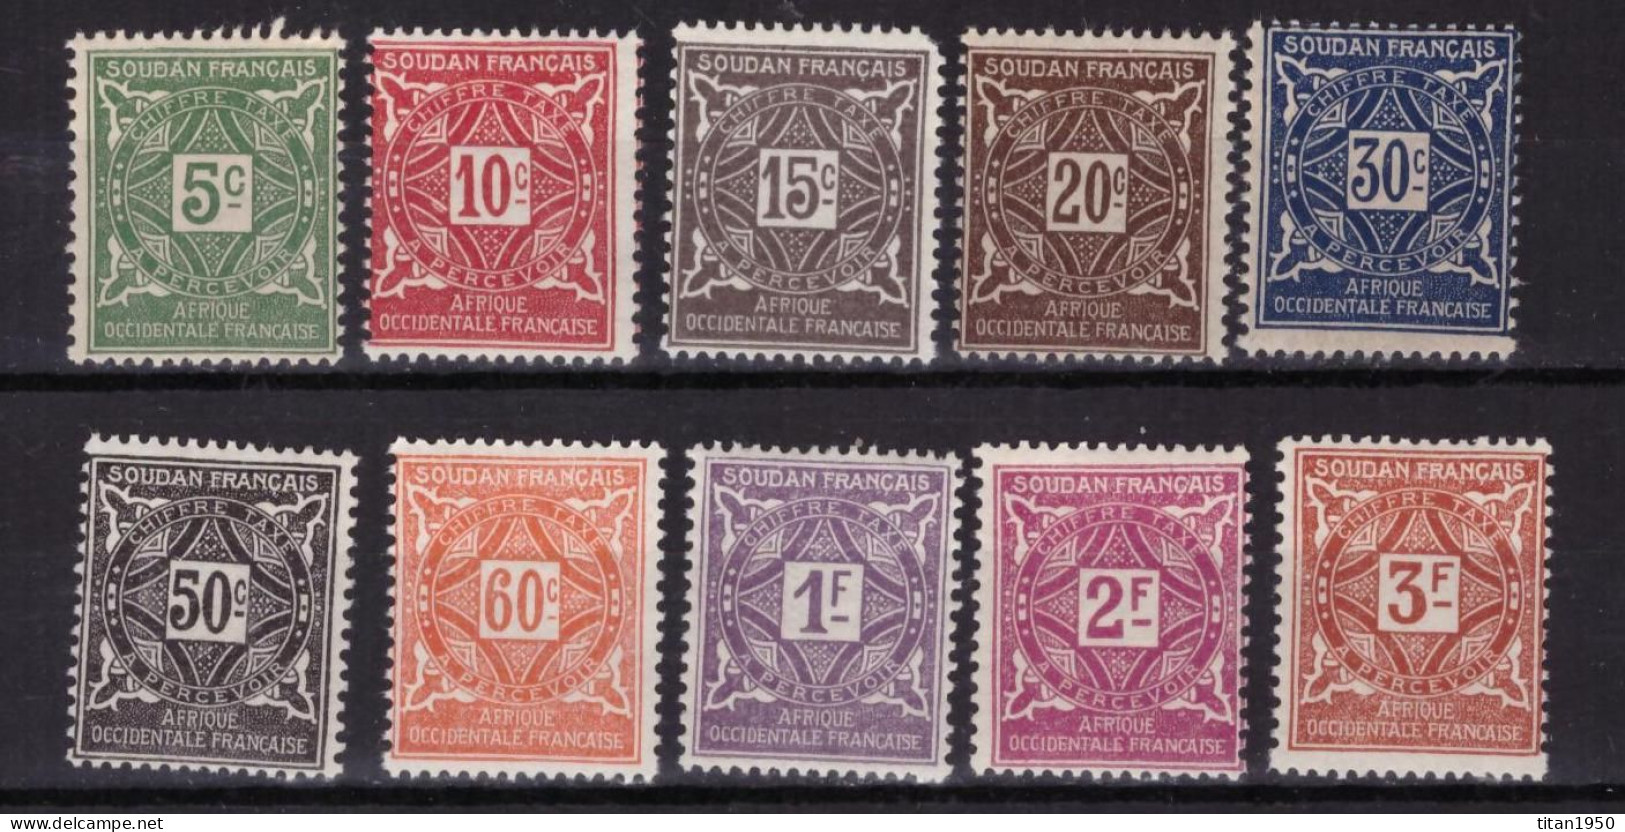 SOUDAN - 1931 -série Taxe - 10 Timbres Neufs ** -  Cote 12,50 € - Neufs